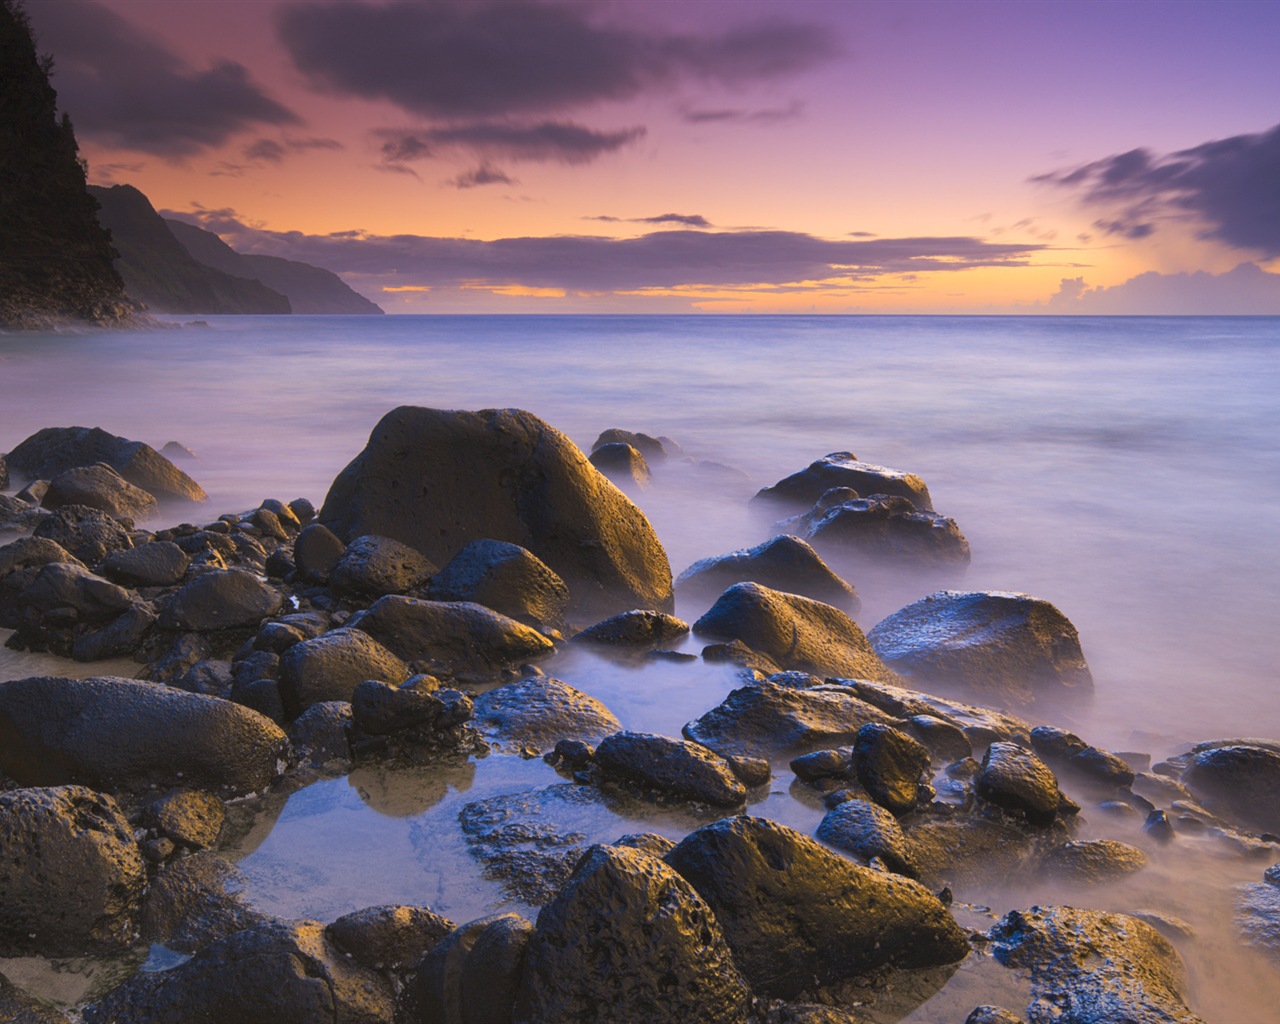 Windows 8 theme wallpaper: Beach sunrise and sunset views #7 - 1280x1024